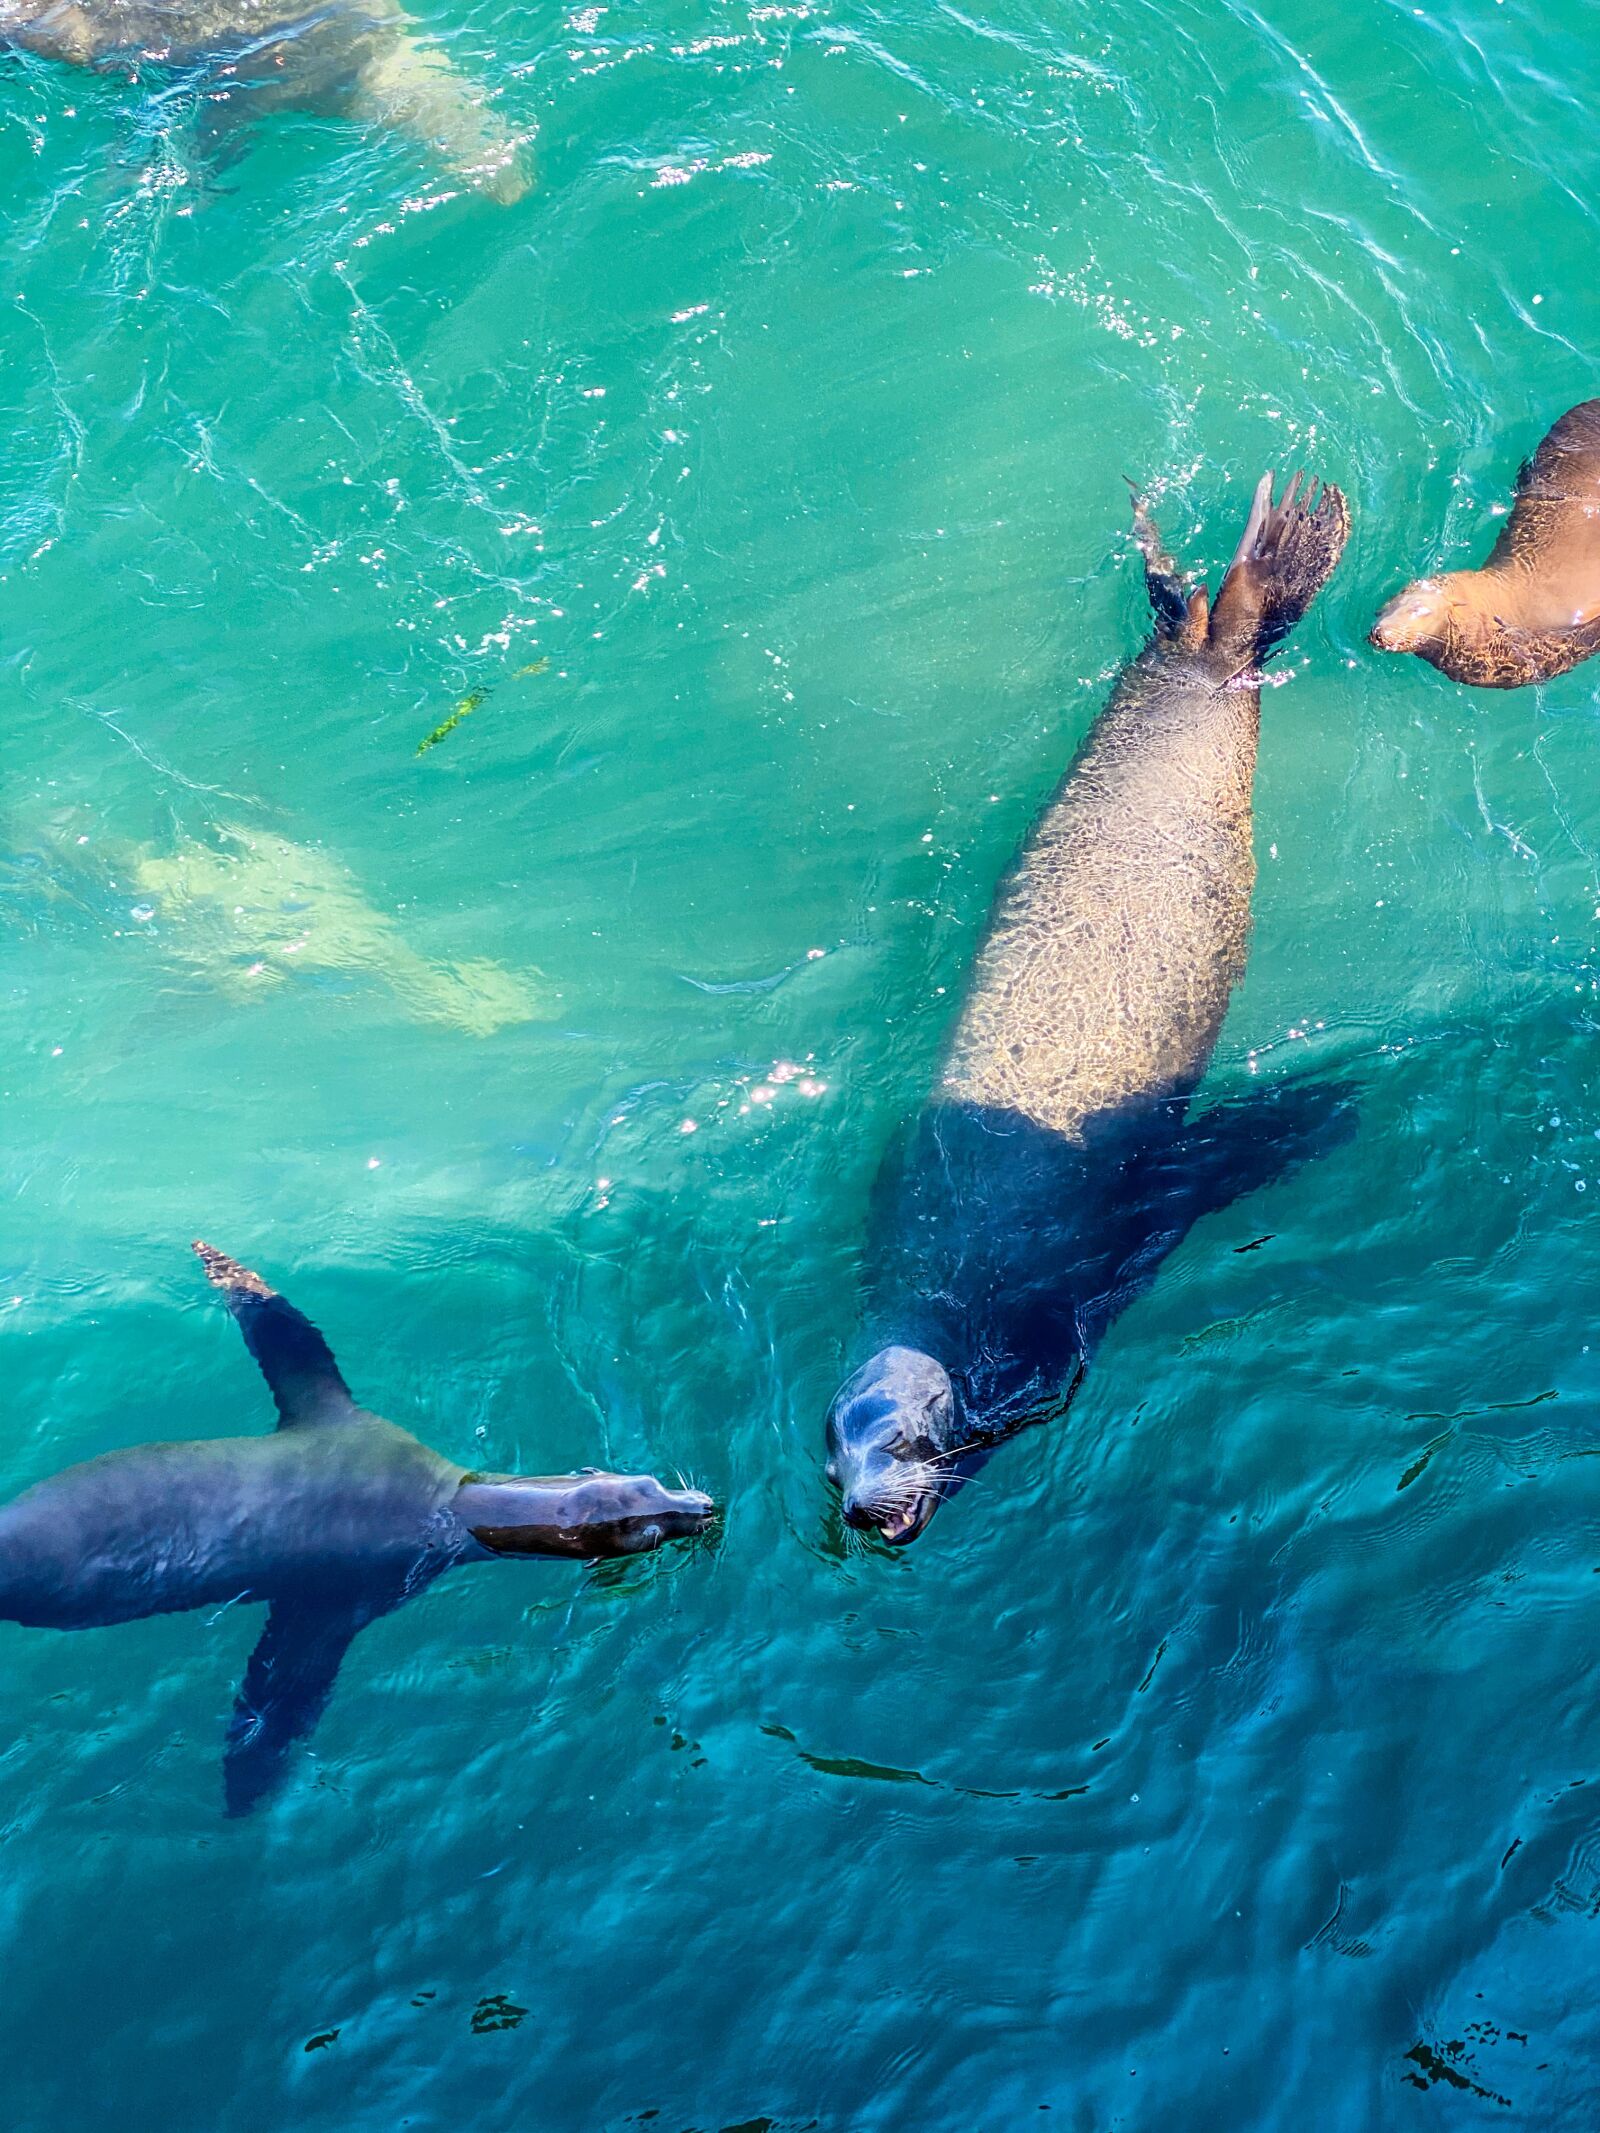 iPhone 11 Pro back triple camera 6mm f/2 sample photo. Sea lions, playful, mammal photography